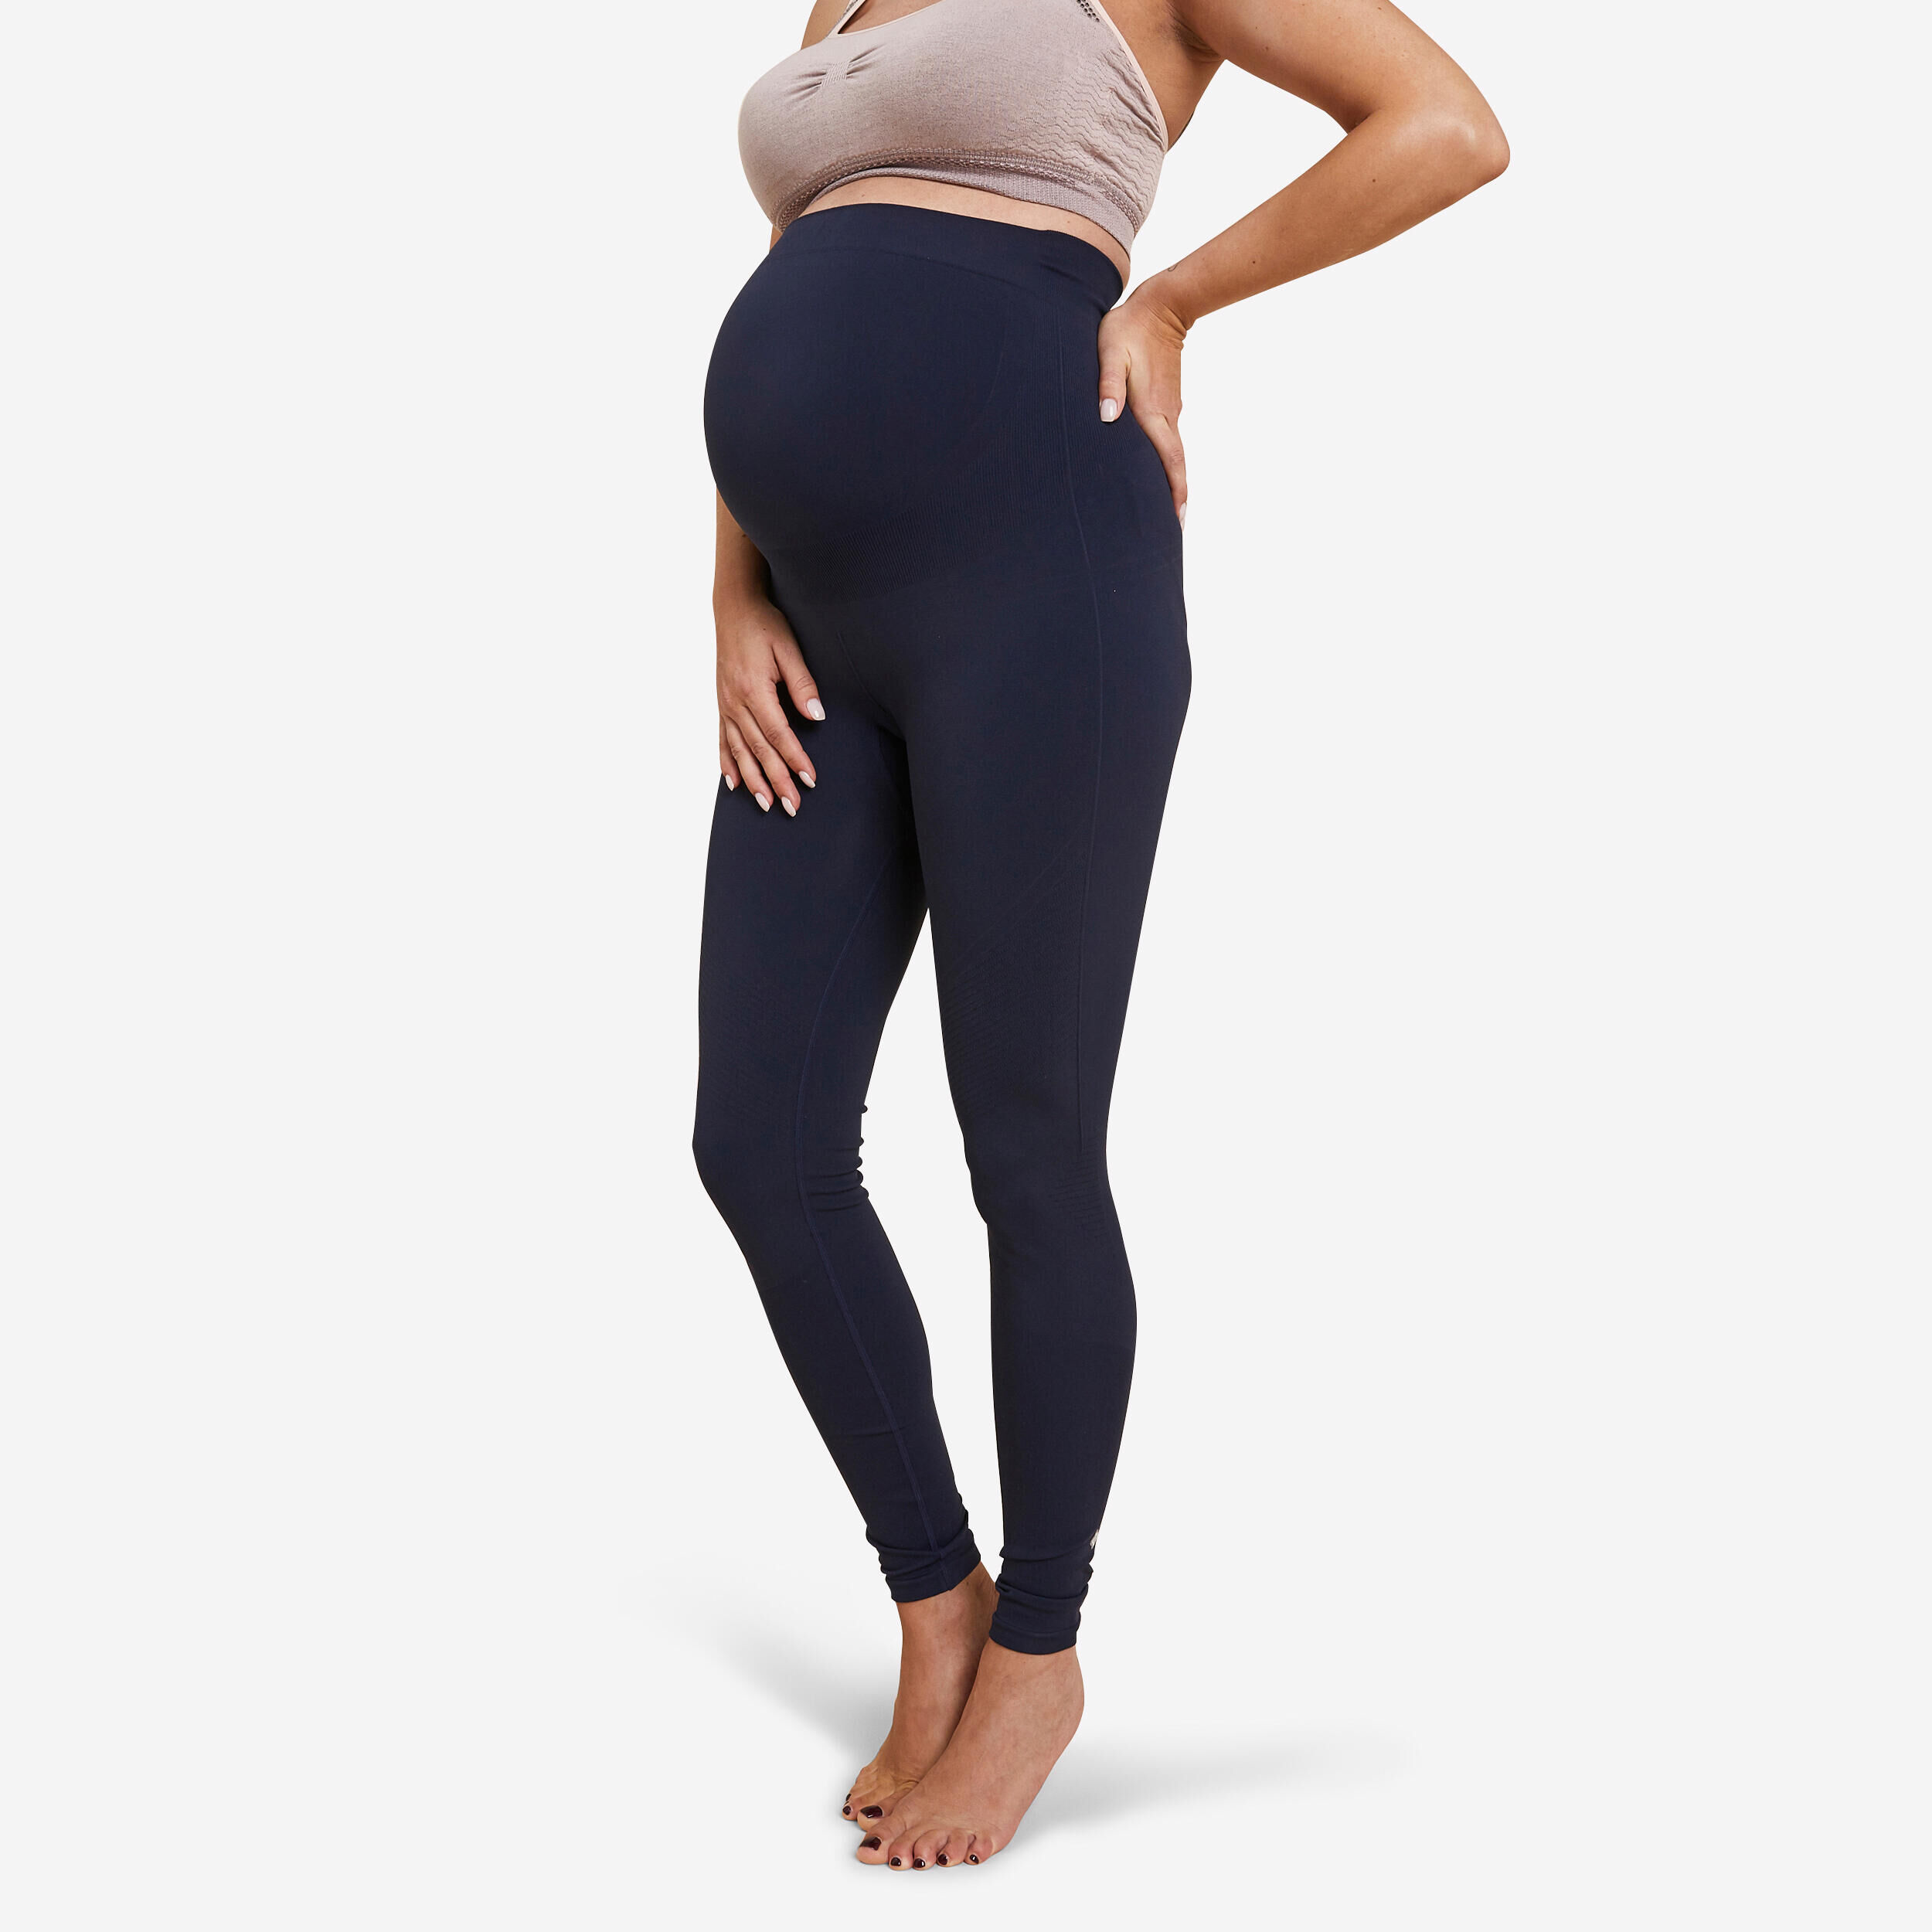 KIMJALY Prenatal Yoga Leggings - Navy Blue